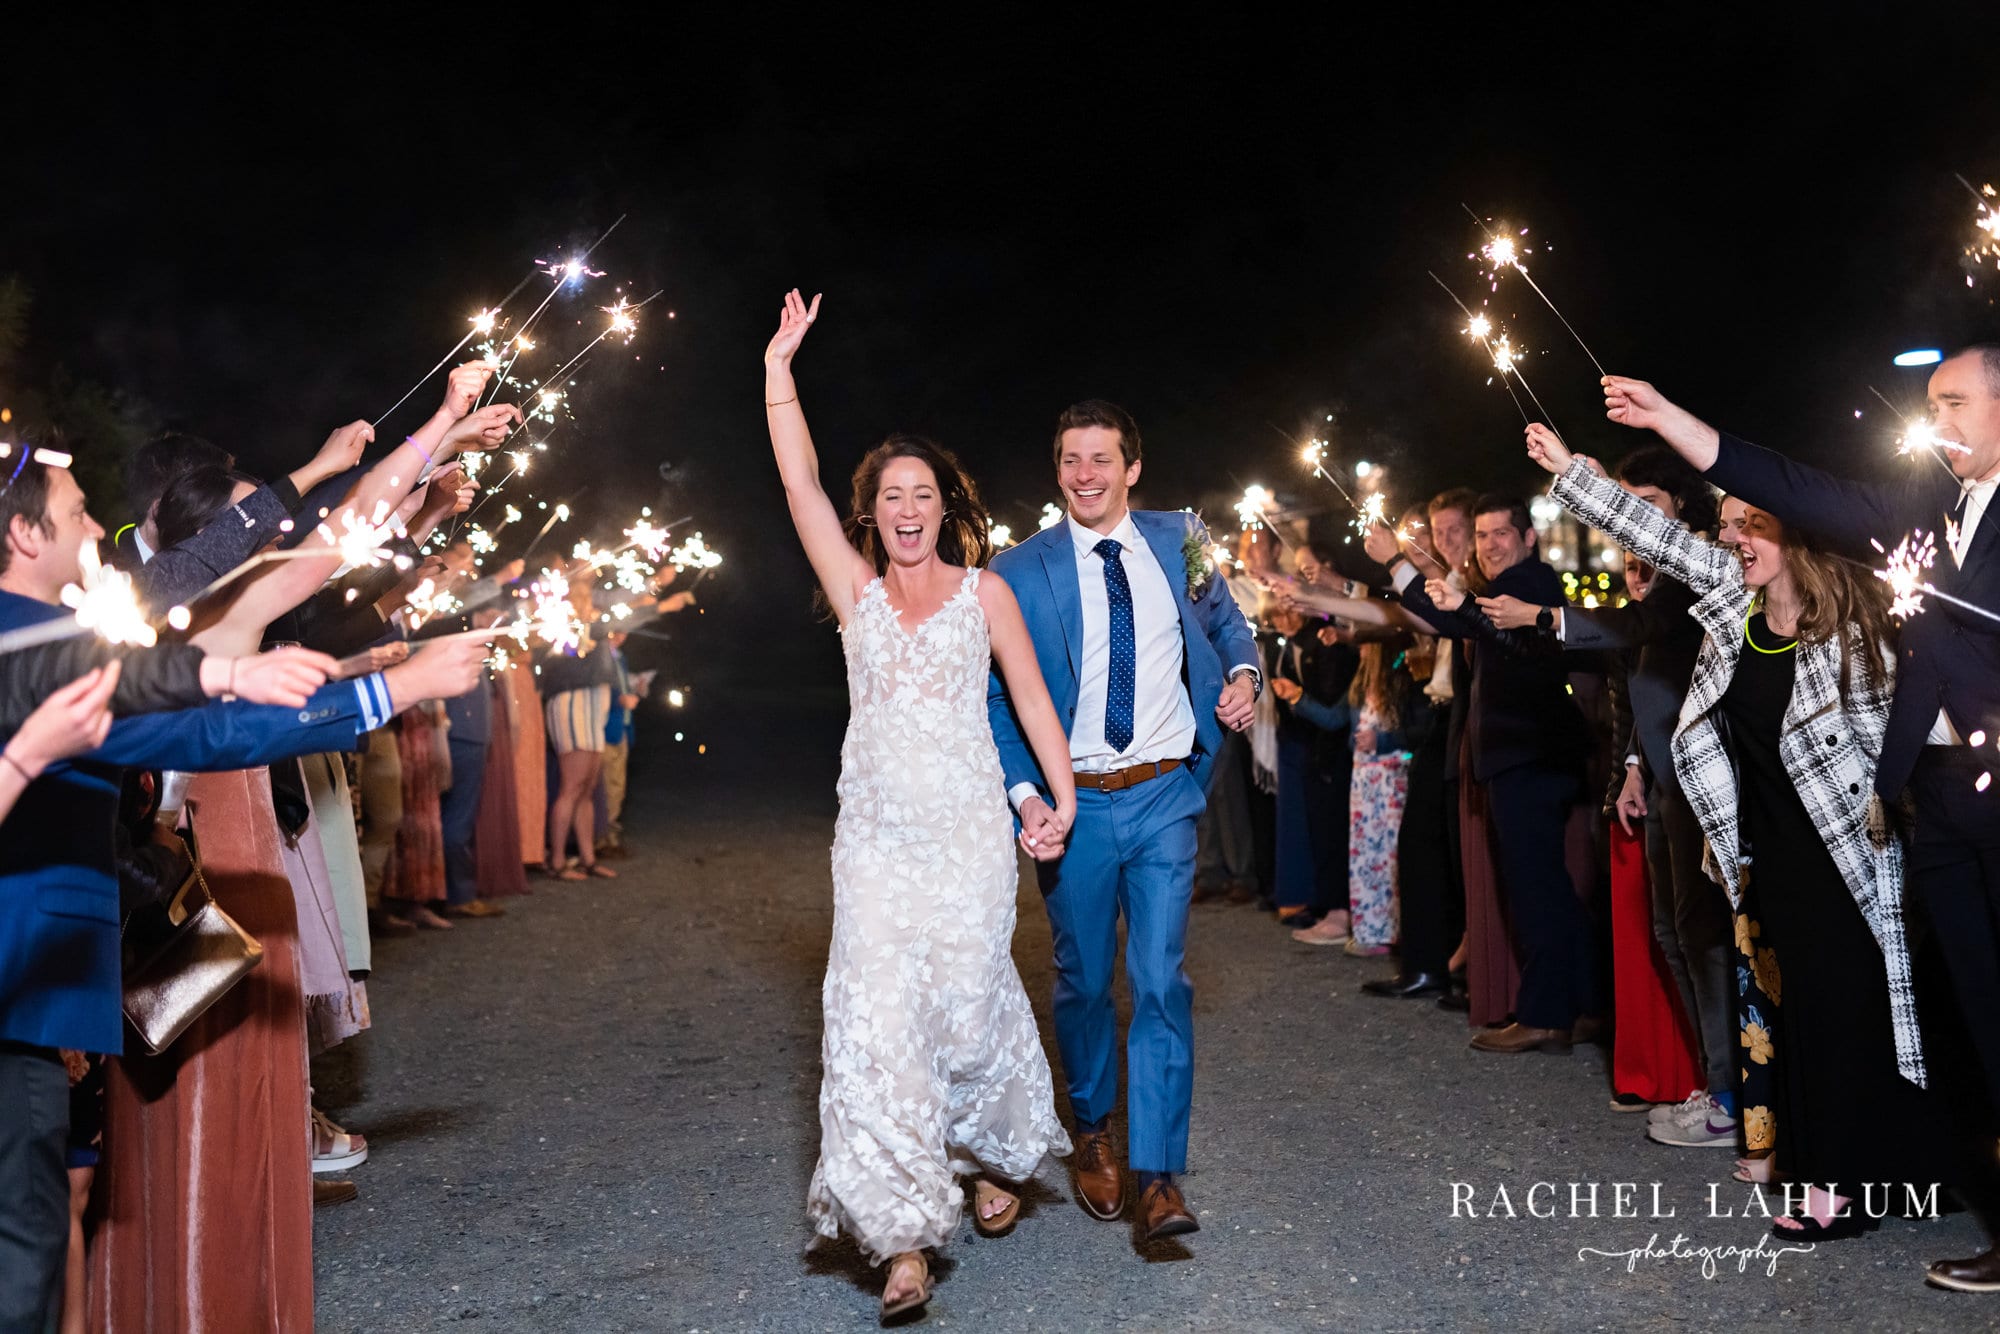 Newlyweds run through a sparkler tunnel after wedding and reception at Camrose Hill Flower Farm in Stillwater, Minnesota.